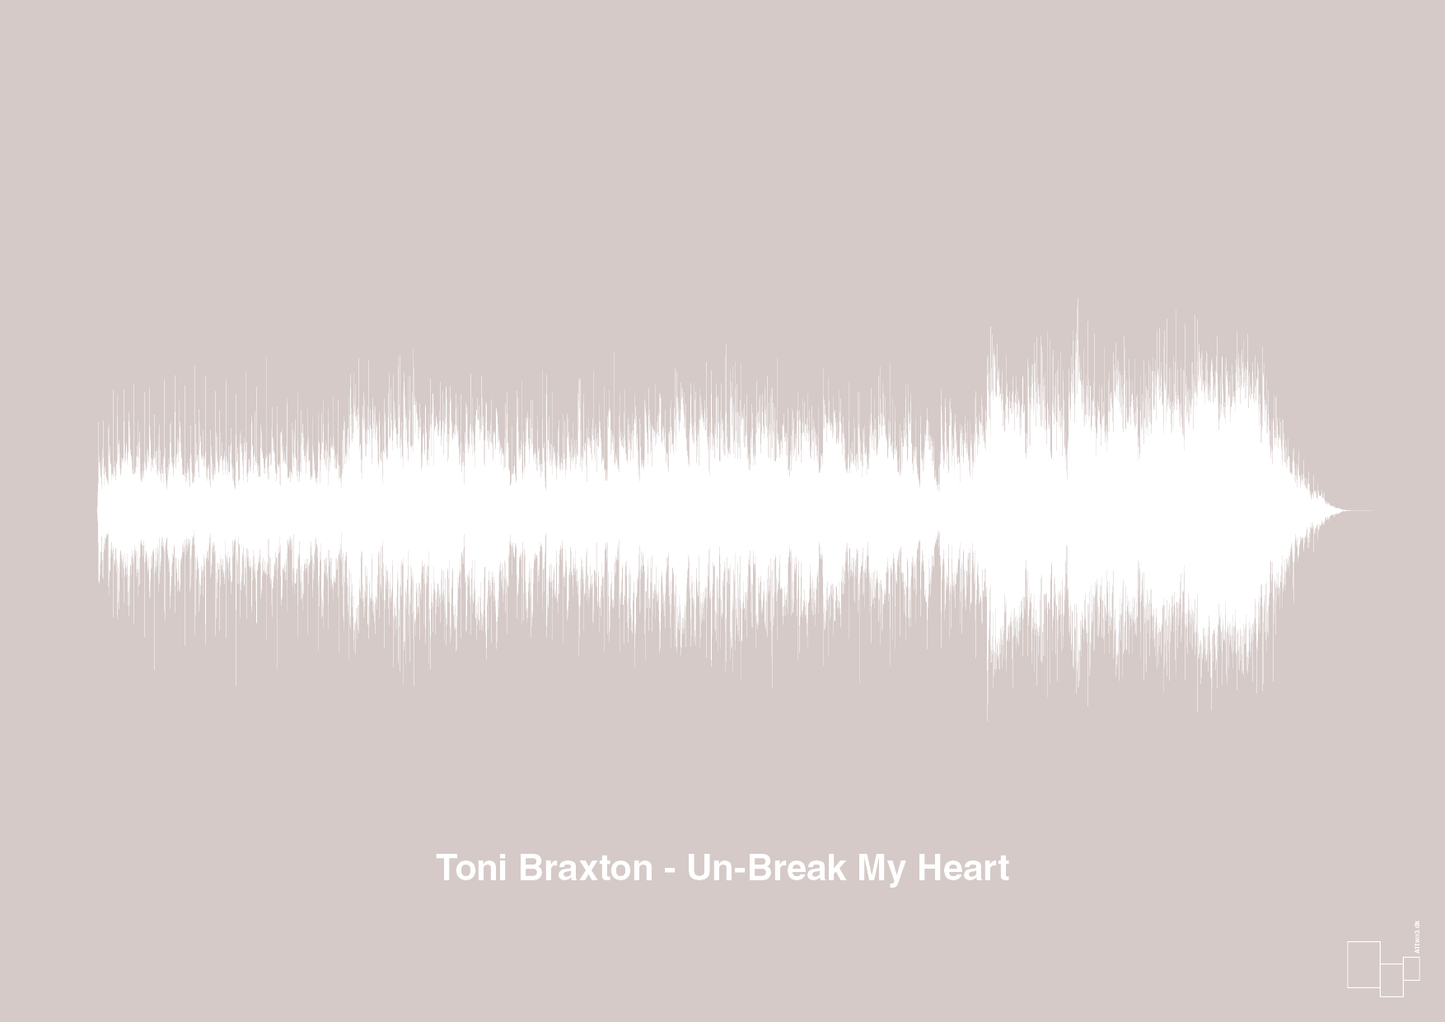 toni braxton - un-break my heart - Plakat med Musik i Broken Beige